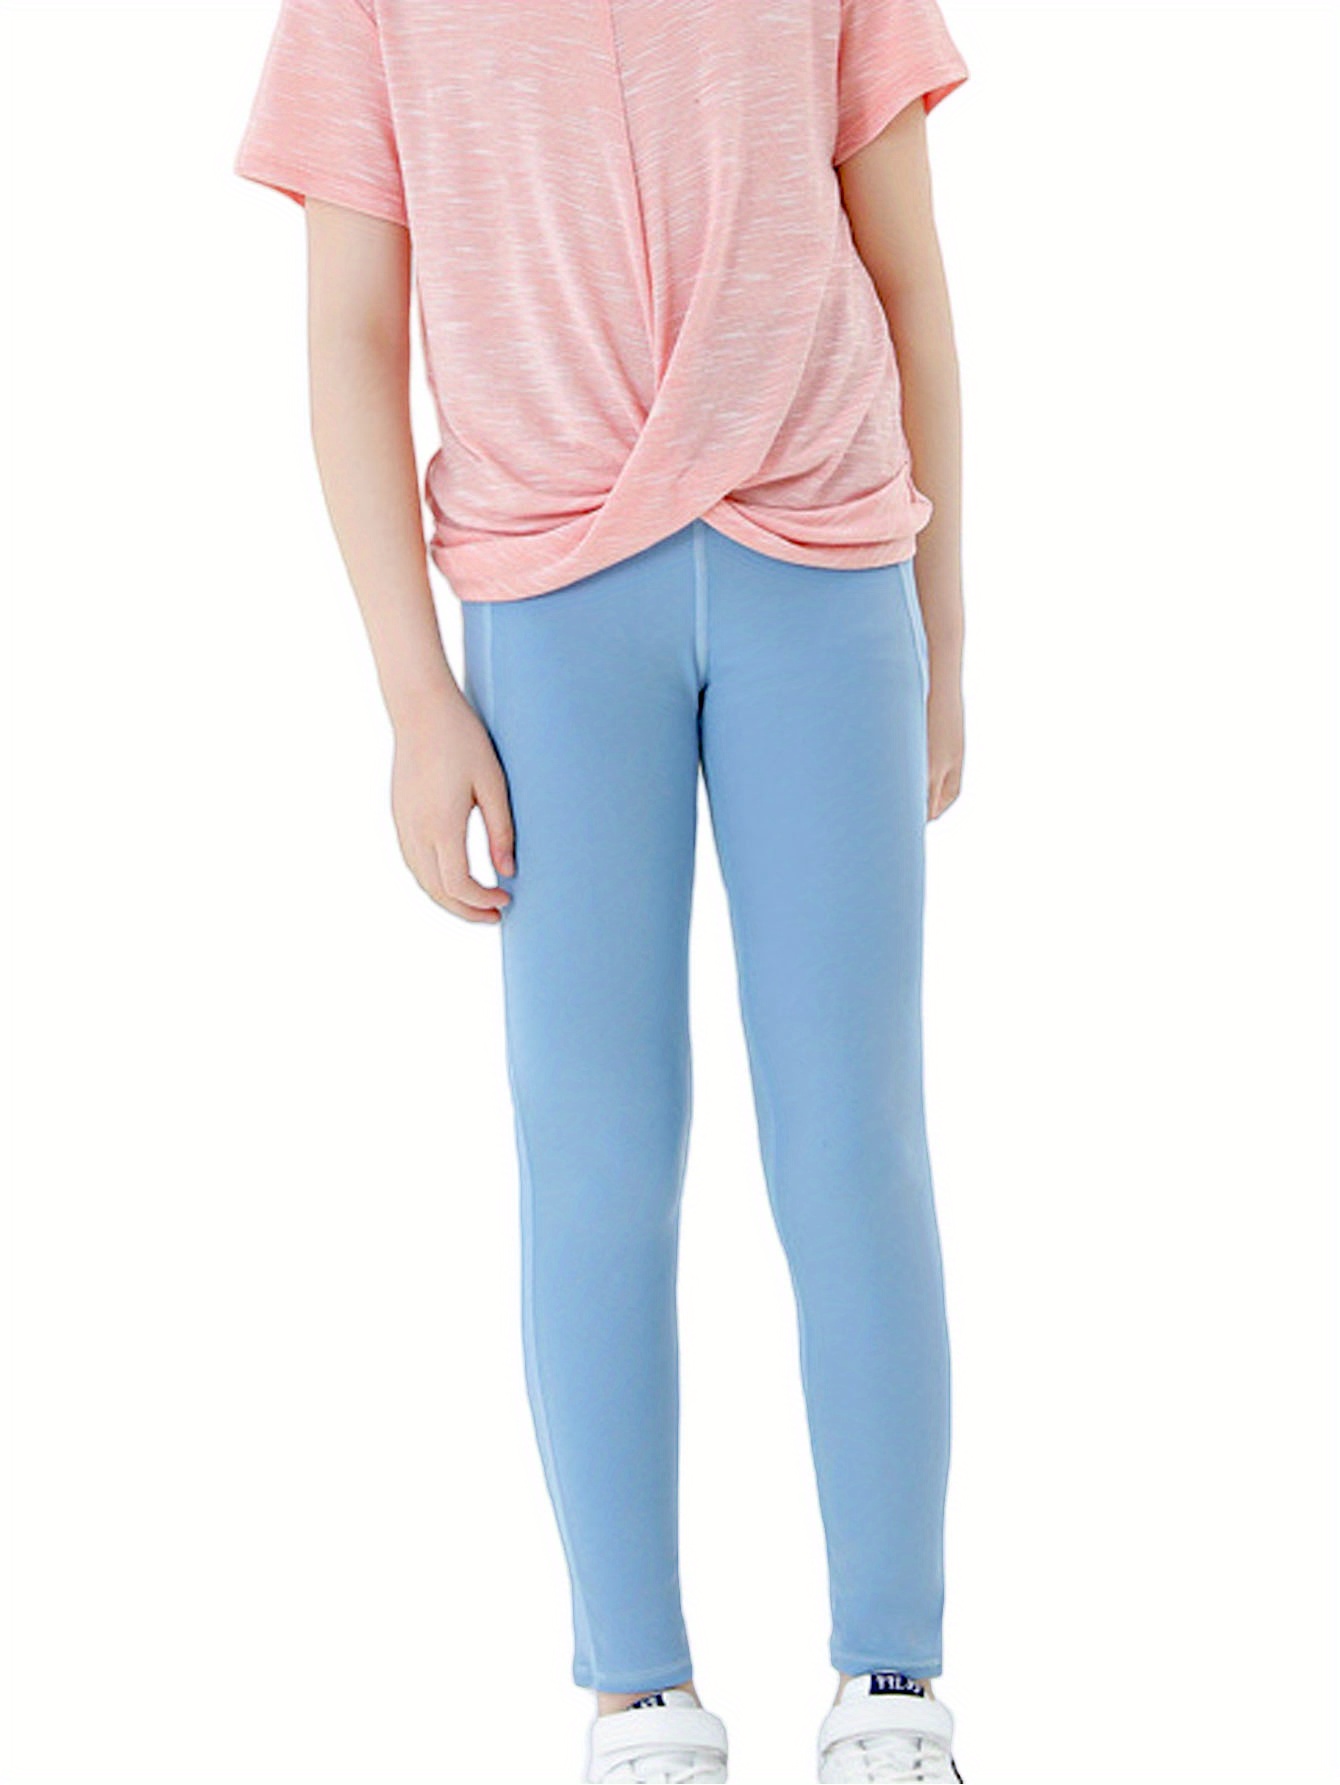 EQWLJWE Summer Pants For Children Kids Girls Fitness Dance Pants Solid  Color Leggings Yoga Sports Long Pants